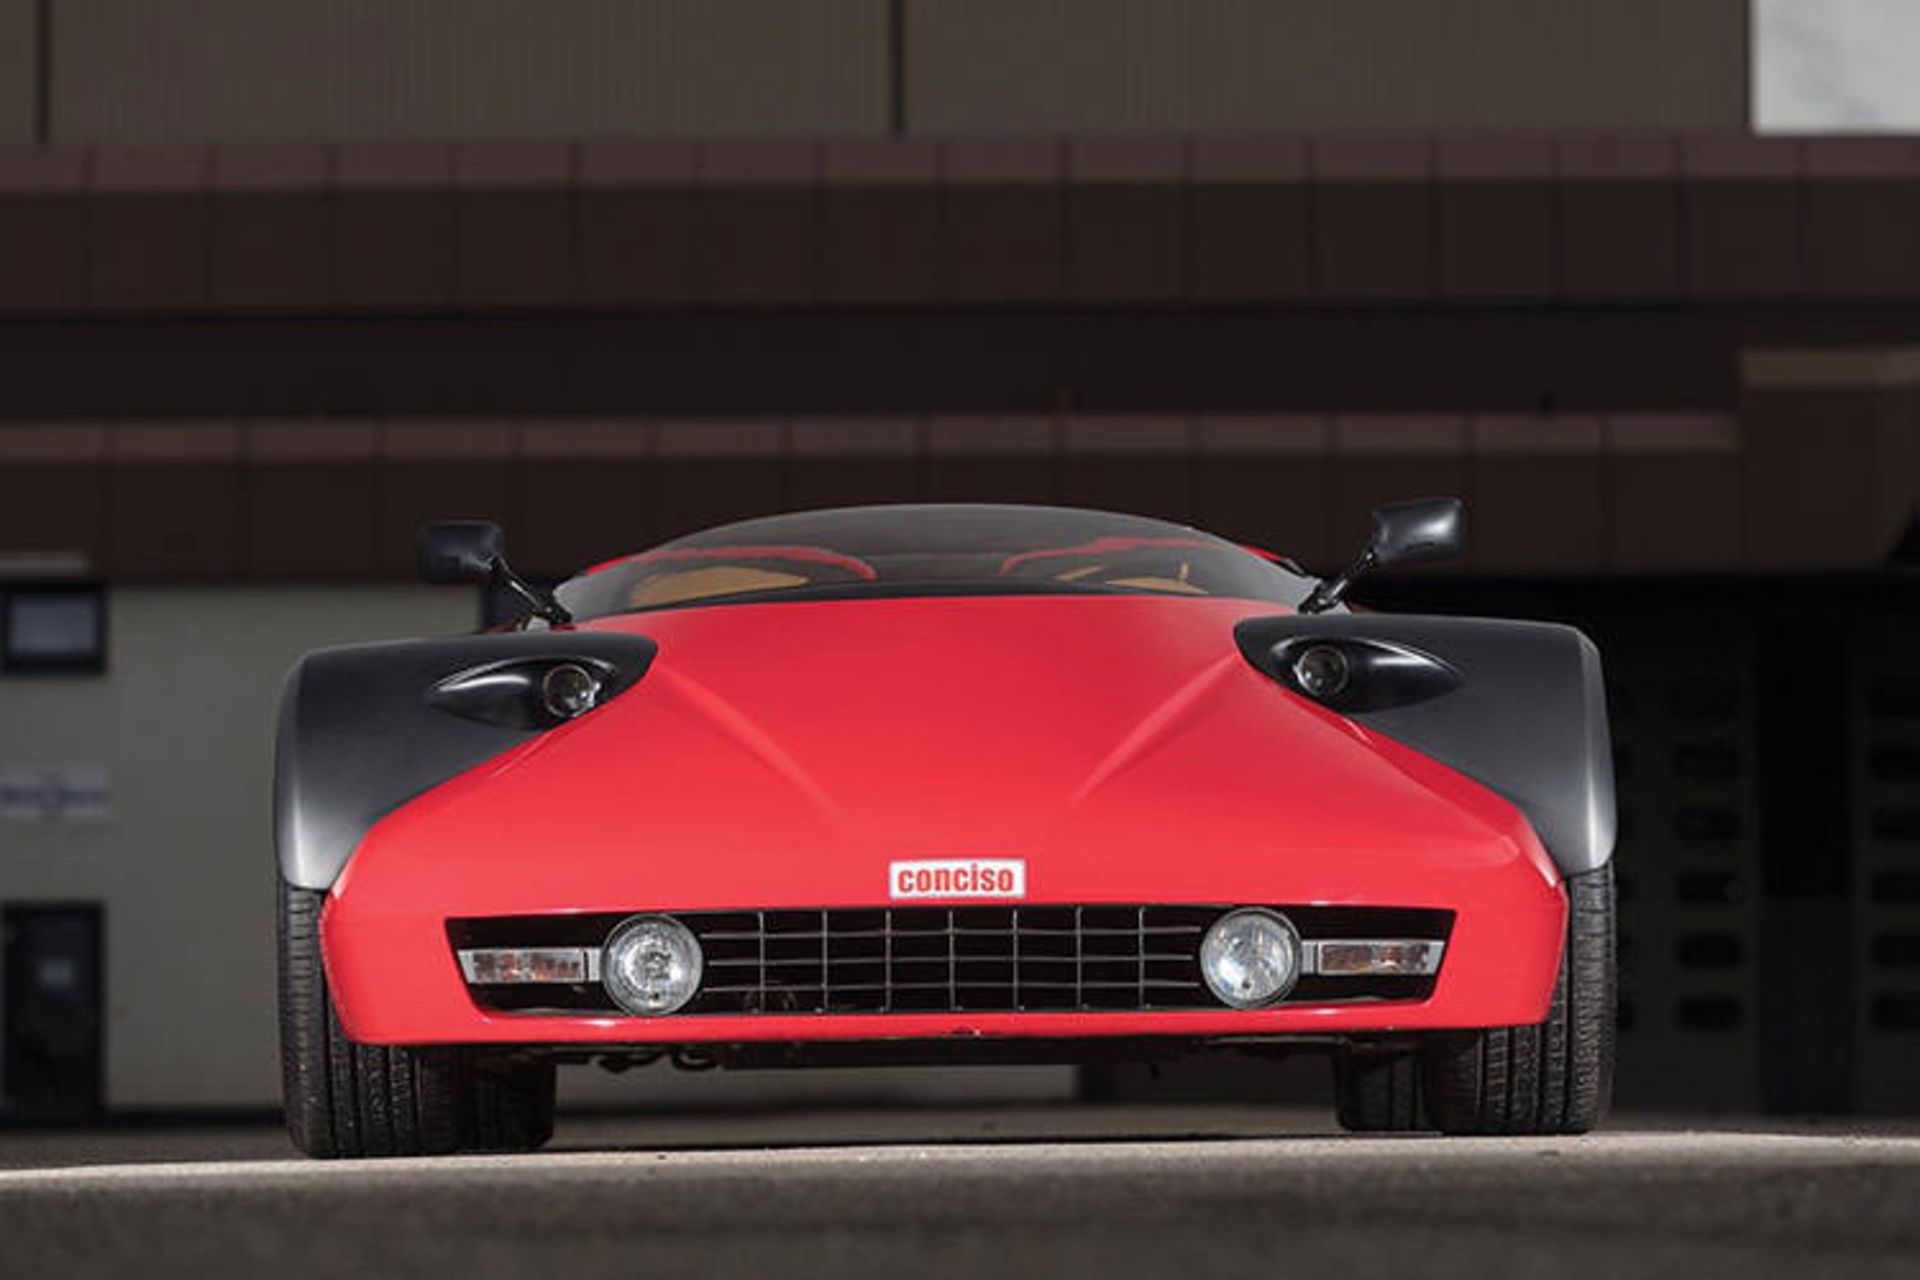 Ferrari 328 GTS Conciso / رودستر مفهومی کونسیسو براساس فراری 328 GTS